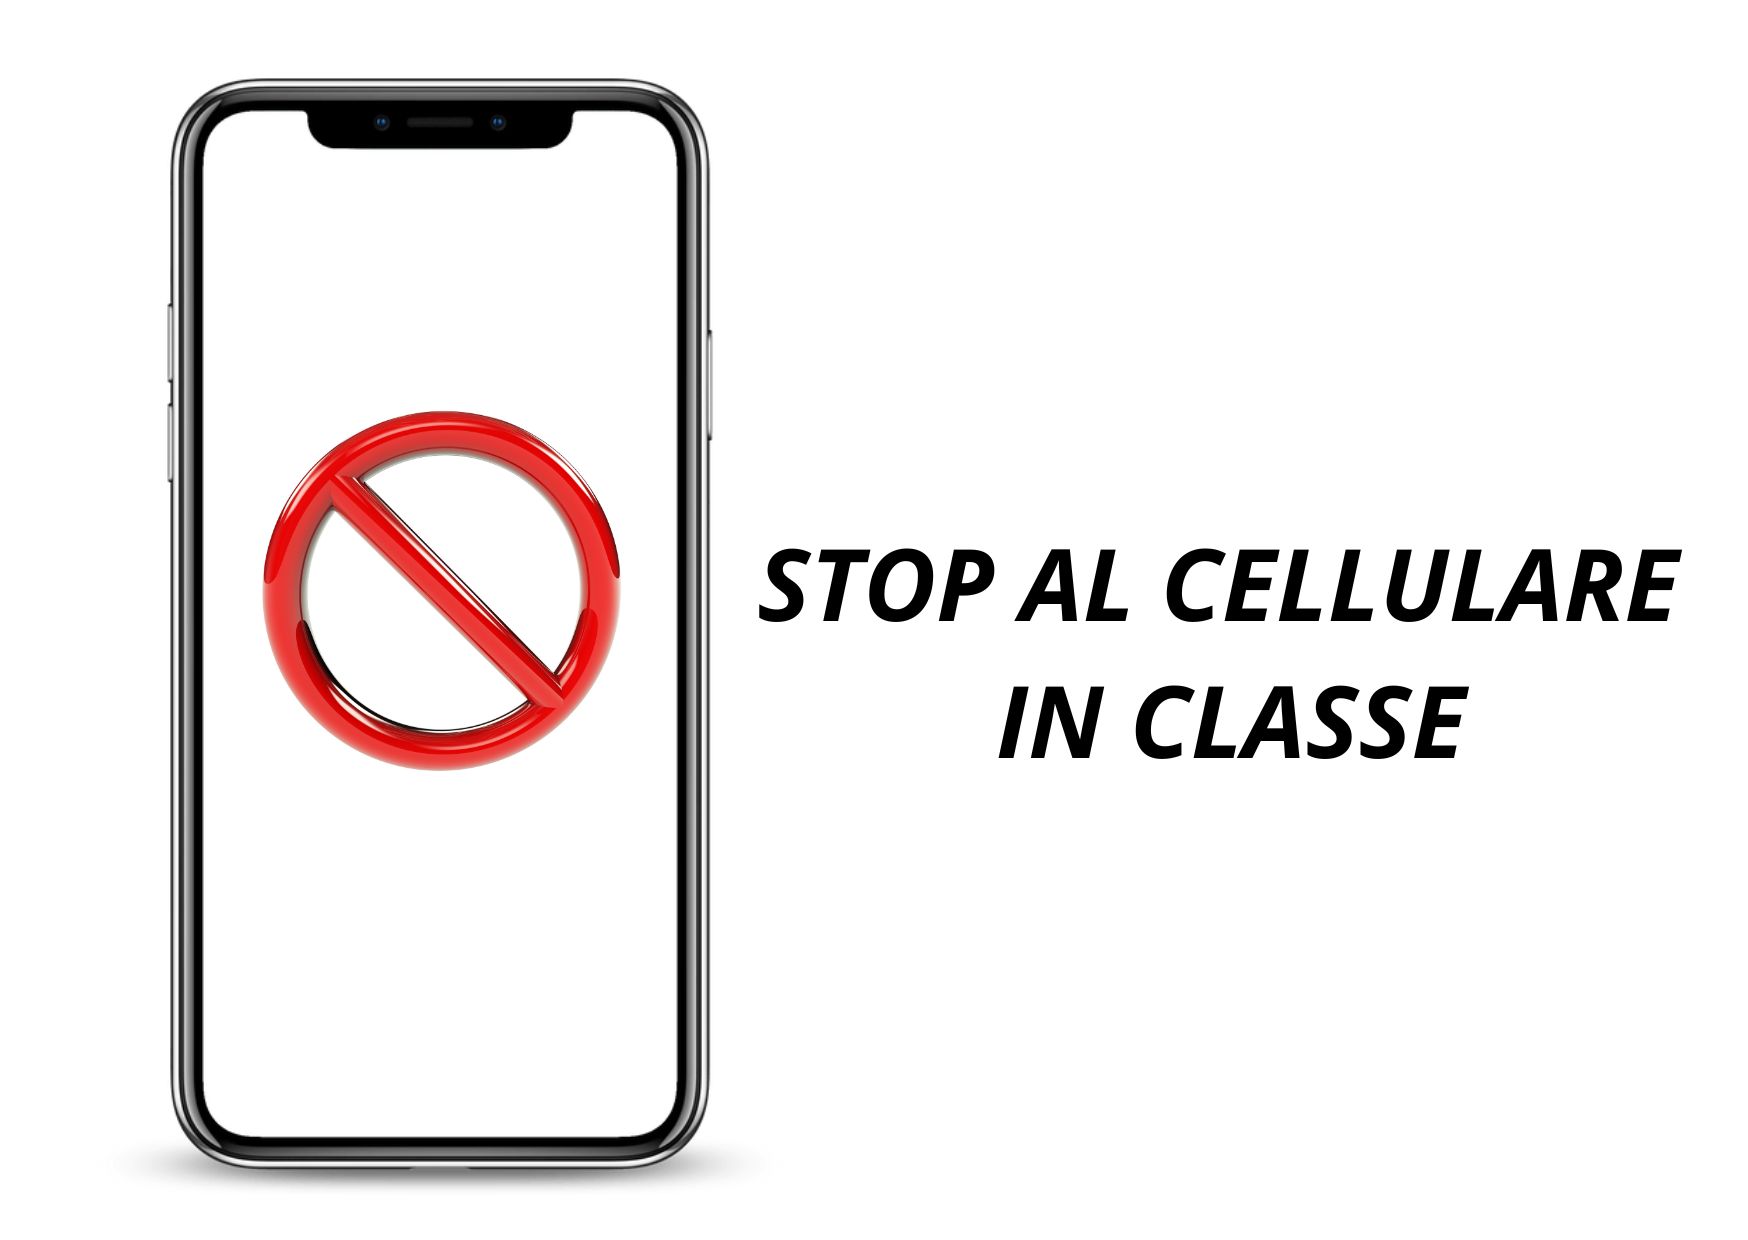 STOP-AL-CELLULARE-IN-CLASSE.jpg